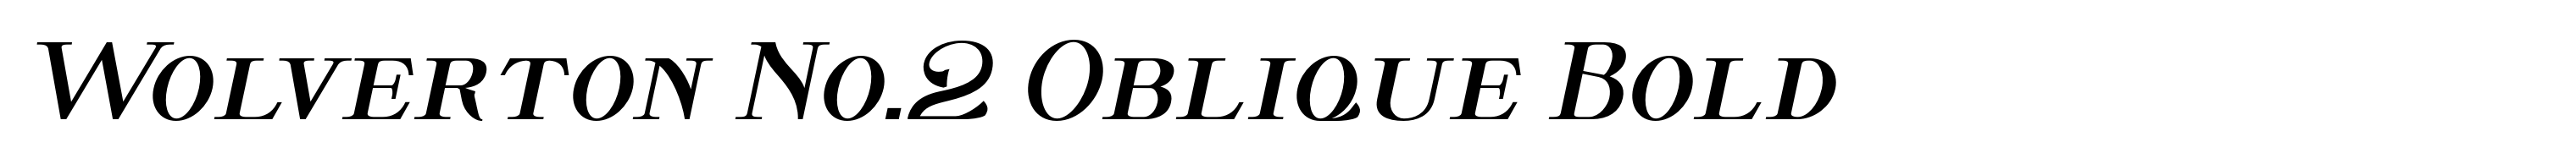 Wolverton No.2 Oblique Bold